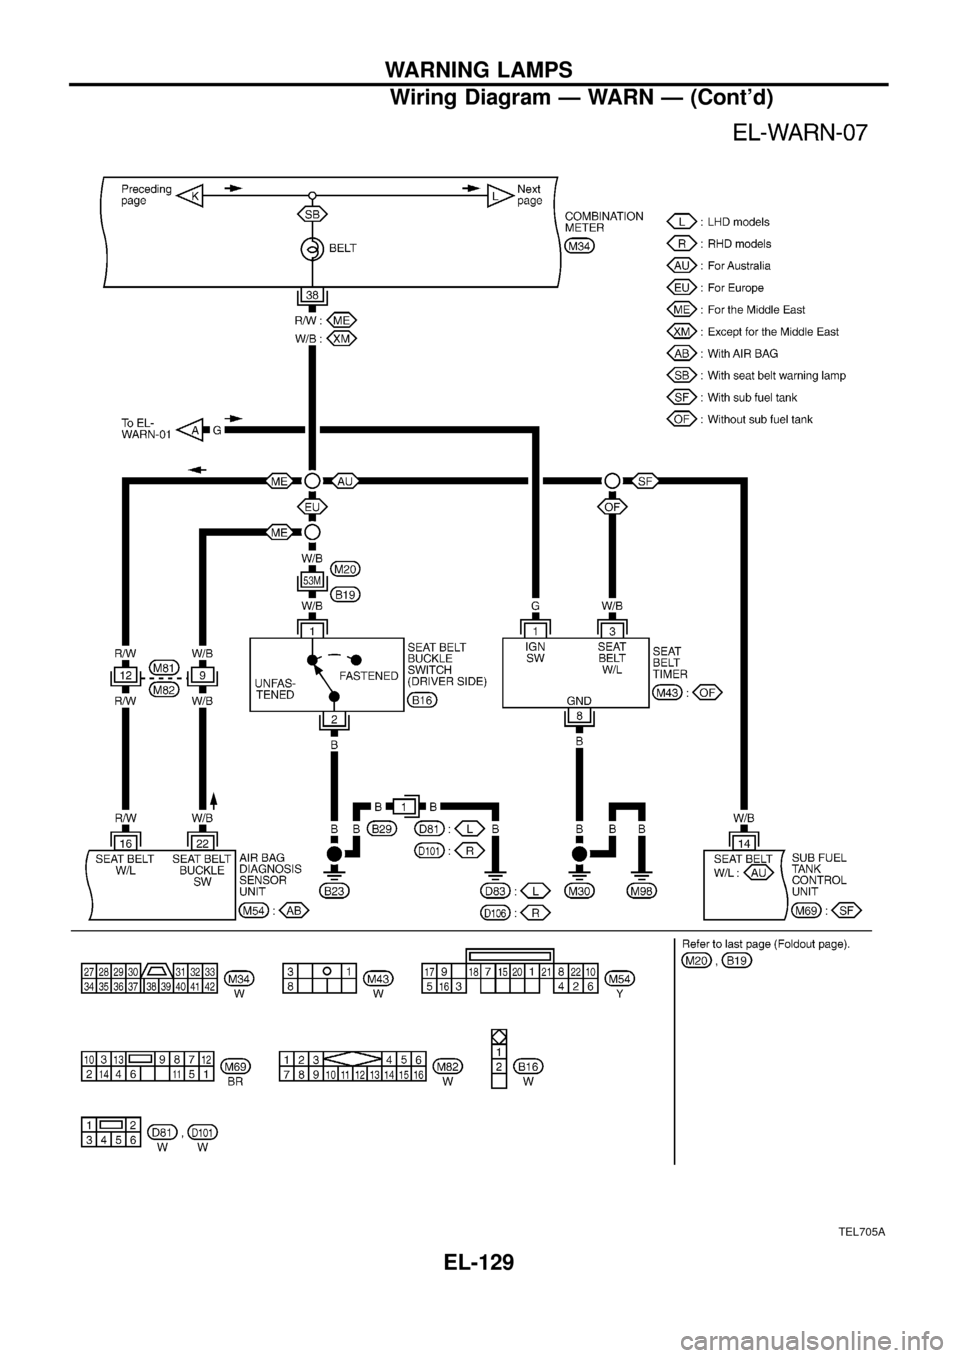 NISSAN PATROL 1998 Y61 / 5.G Electrical System User Guide TEL705A
WARNING LAMPS
Wiring Diagram Ð WARN Ð (Contd)
EL-129 